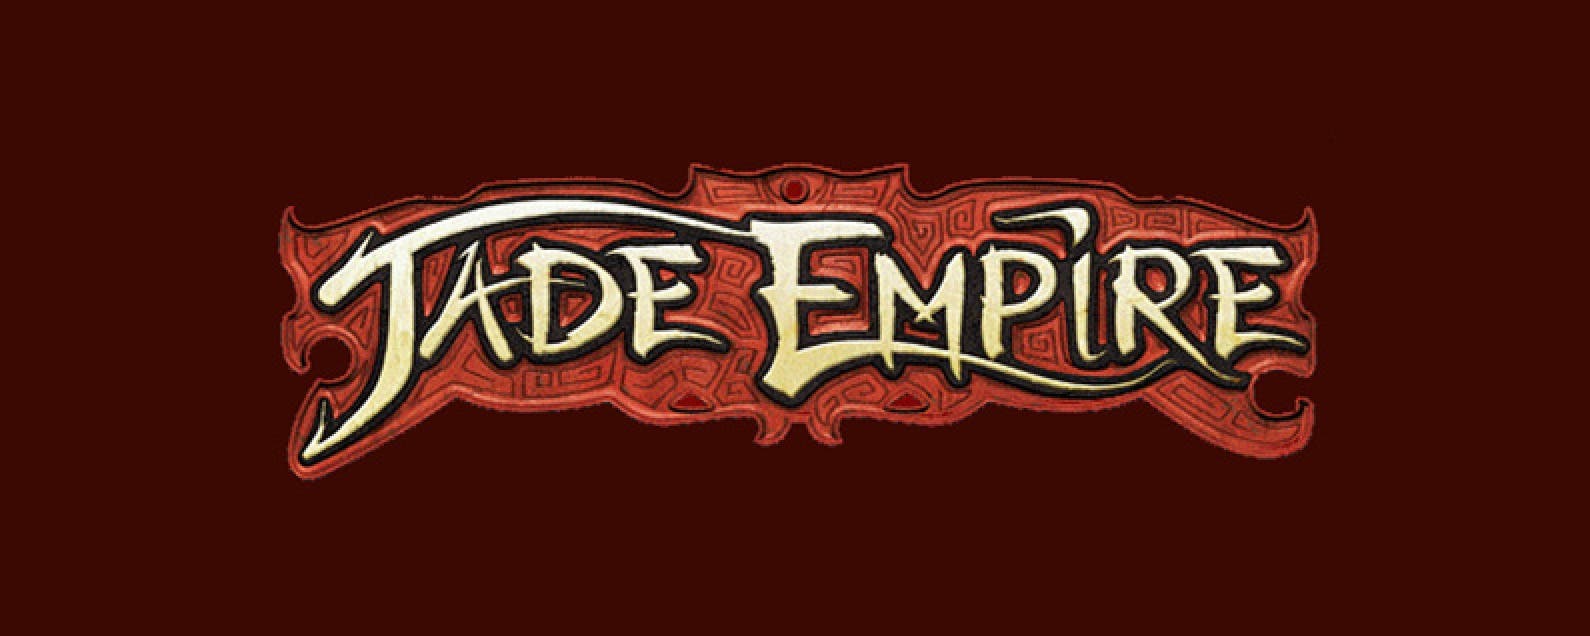 jade empire special edition console commands